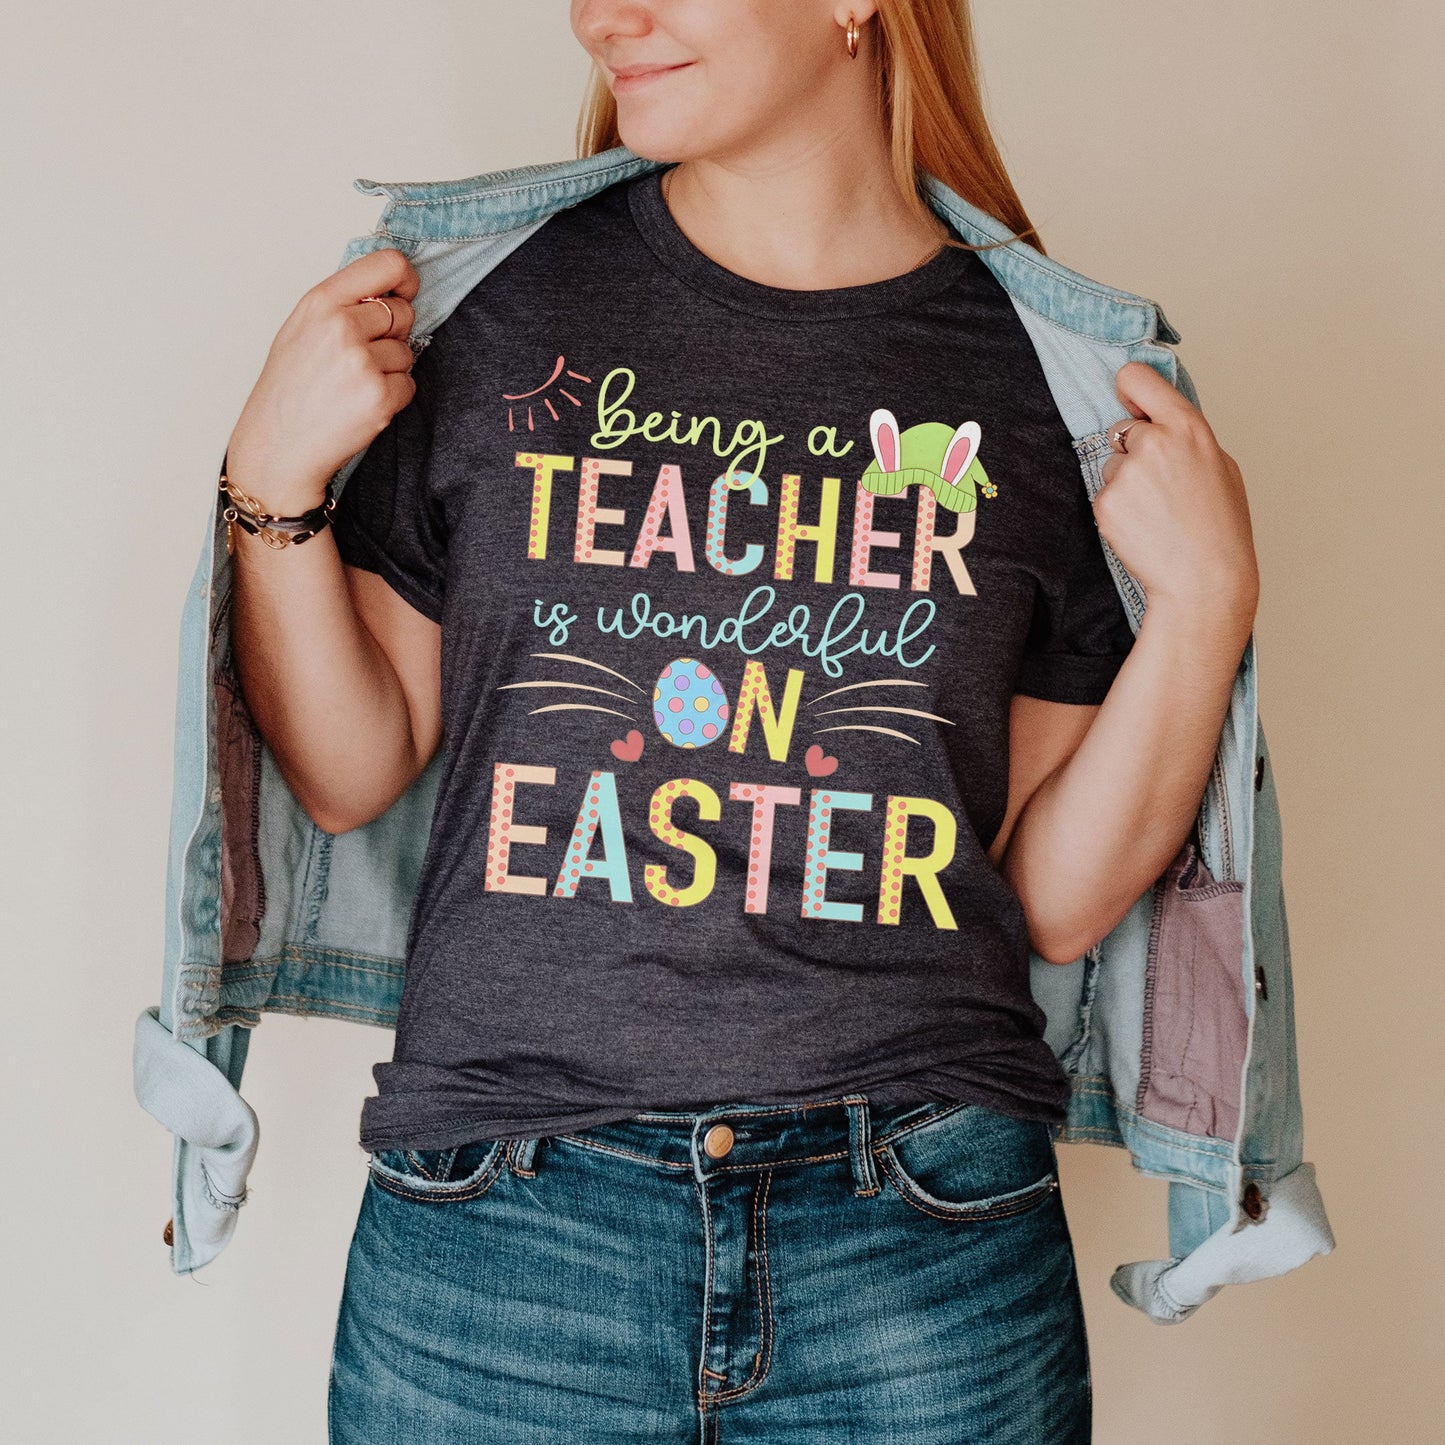 Being A Teacher Is Wonderful On Easter Shirt, Preschool Kindergarten Elementary School Hip Hop Easter Tee Happy Pre-K Kinder Matching Bunny